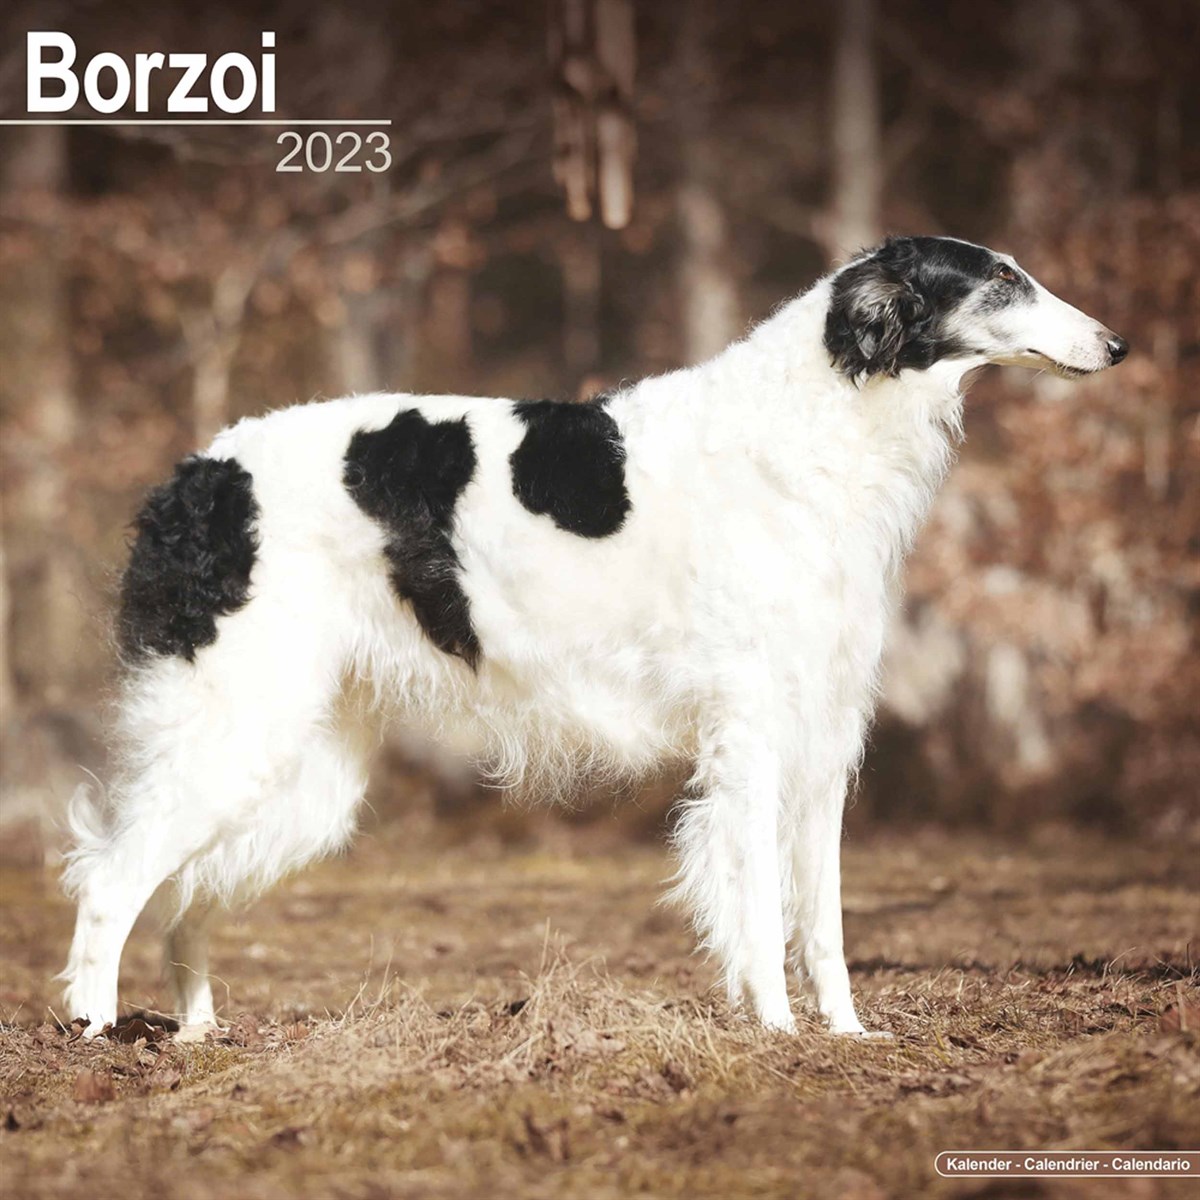 Borzoi 2023 Calendars